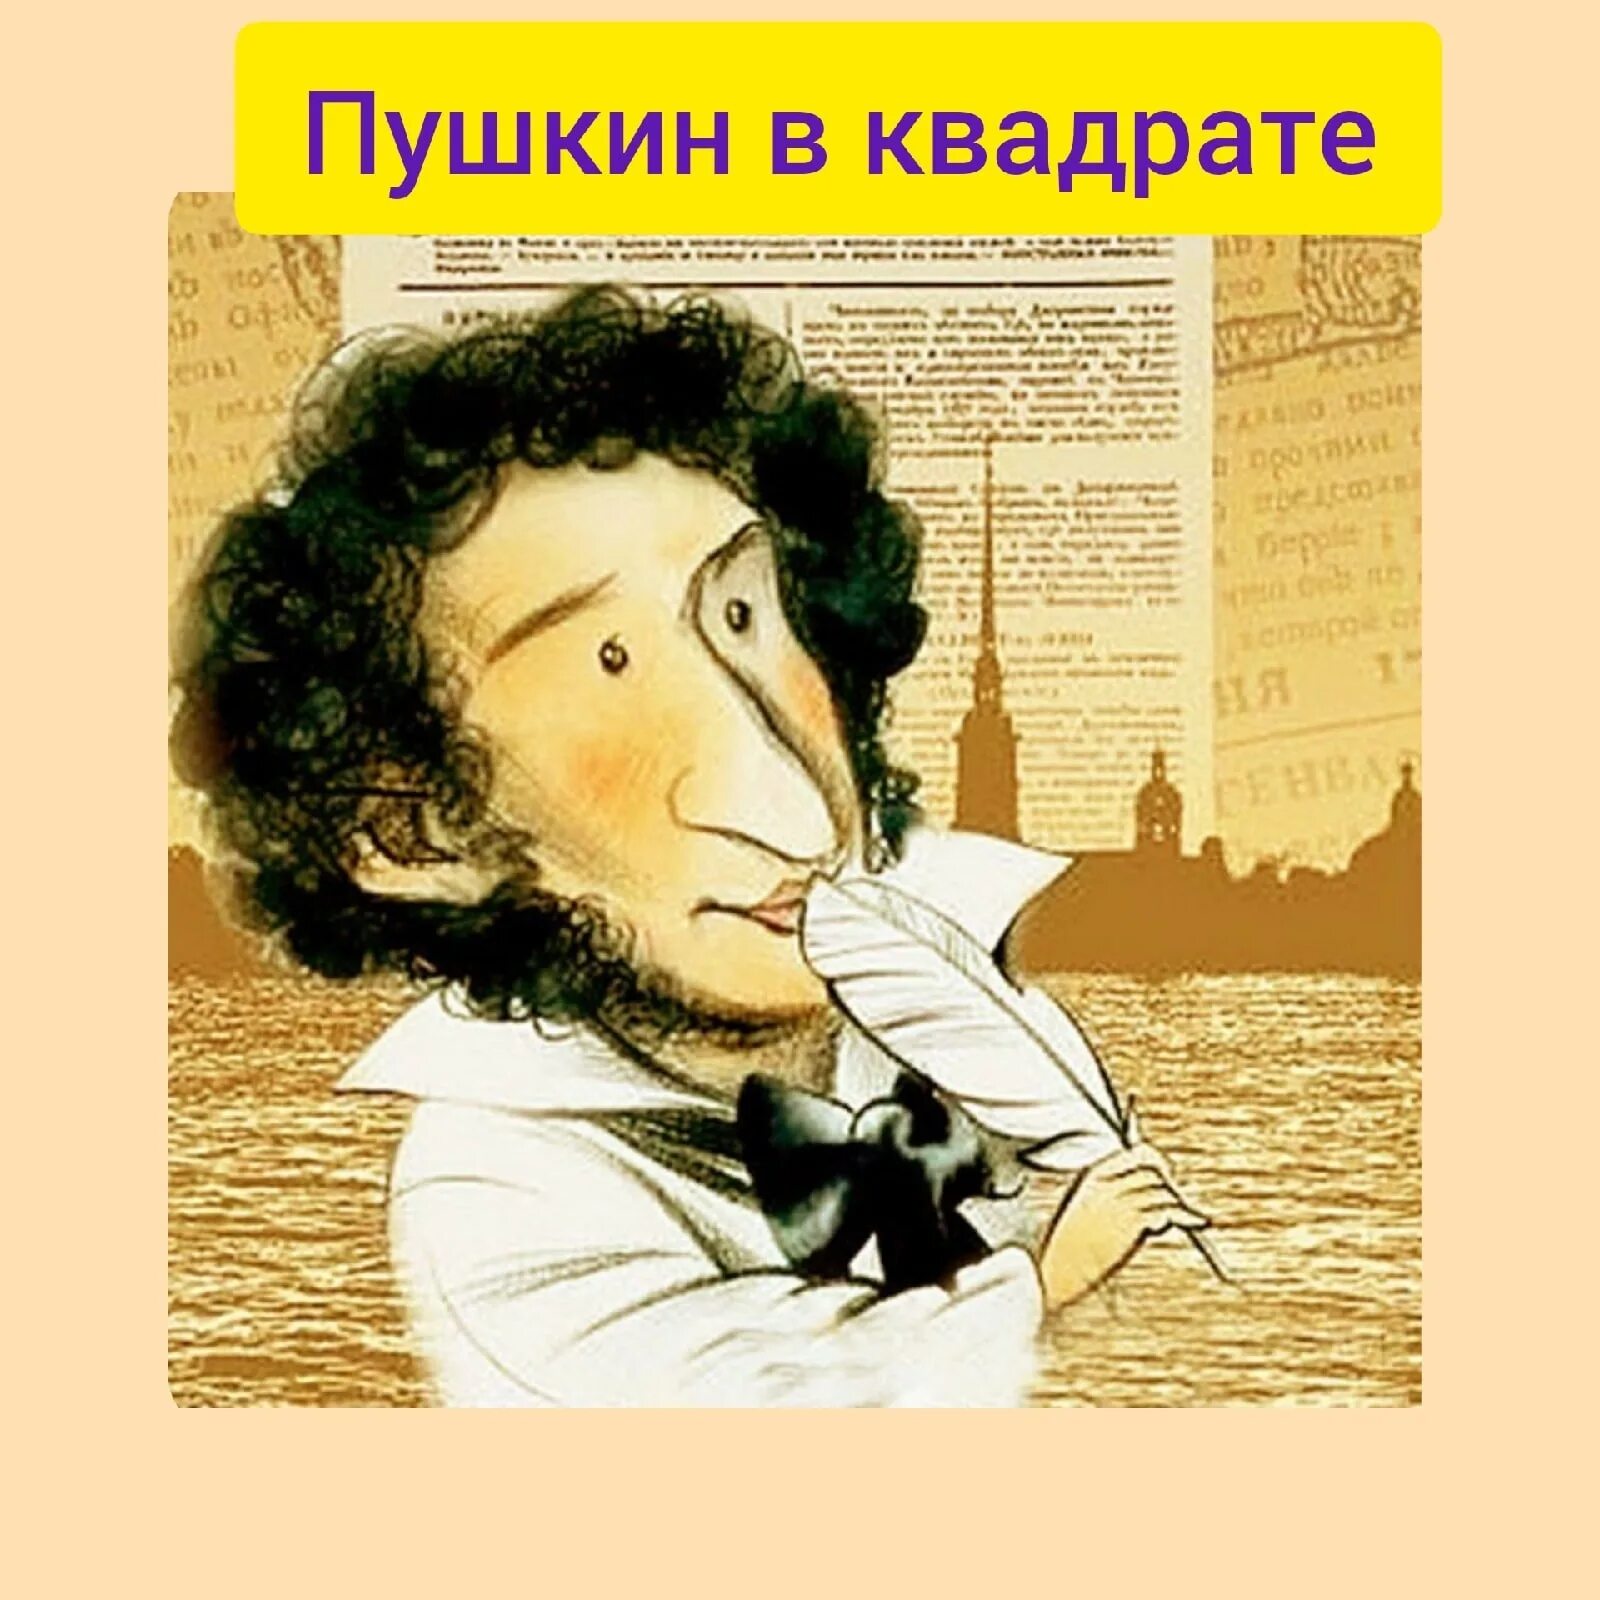 Пушкин грозит. Пушкин прикол. Пушкин смешной. Пушкин карикатура.